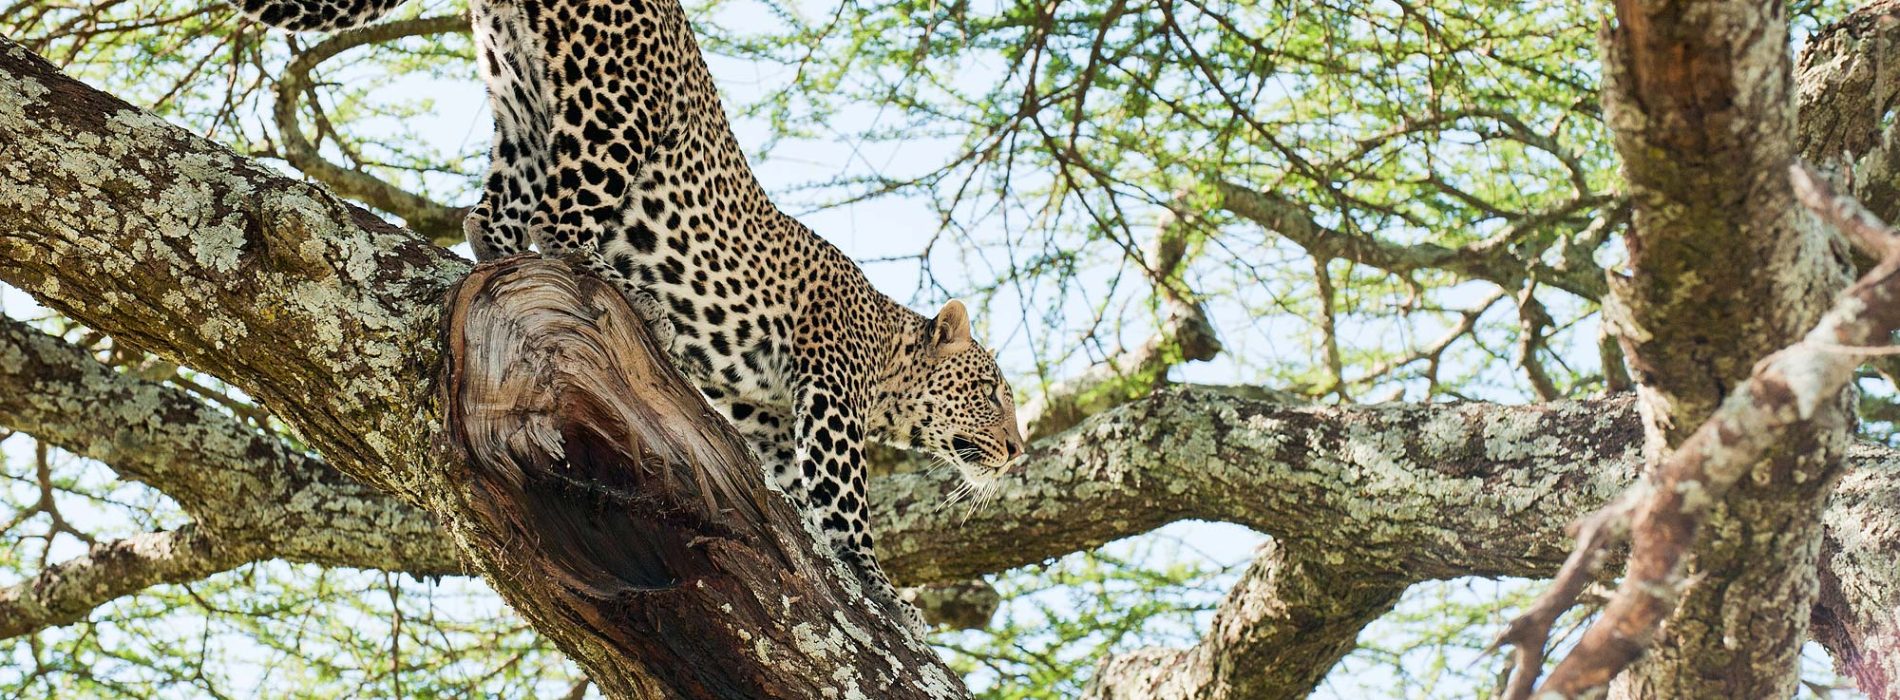 Leopard in Serengeti National Park Tanzania, Wildlife Safari